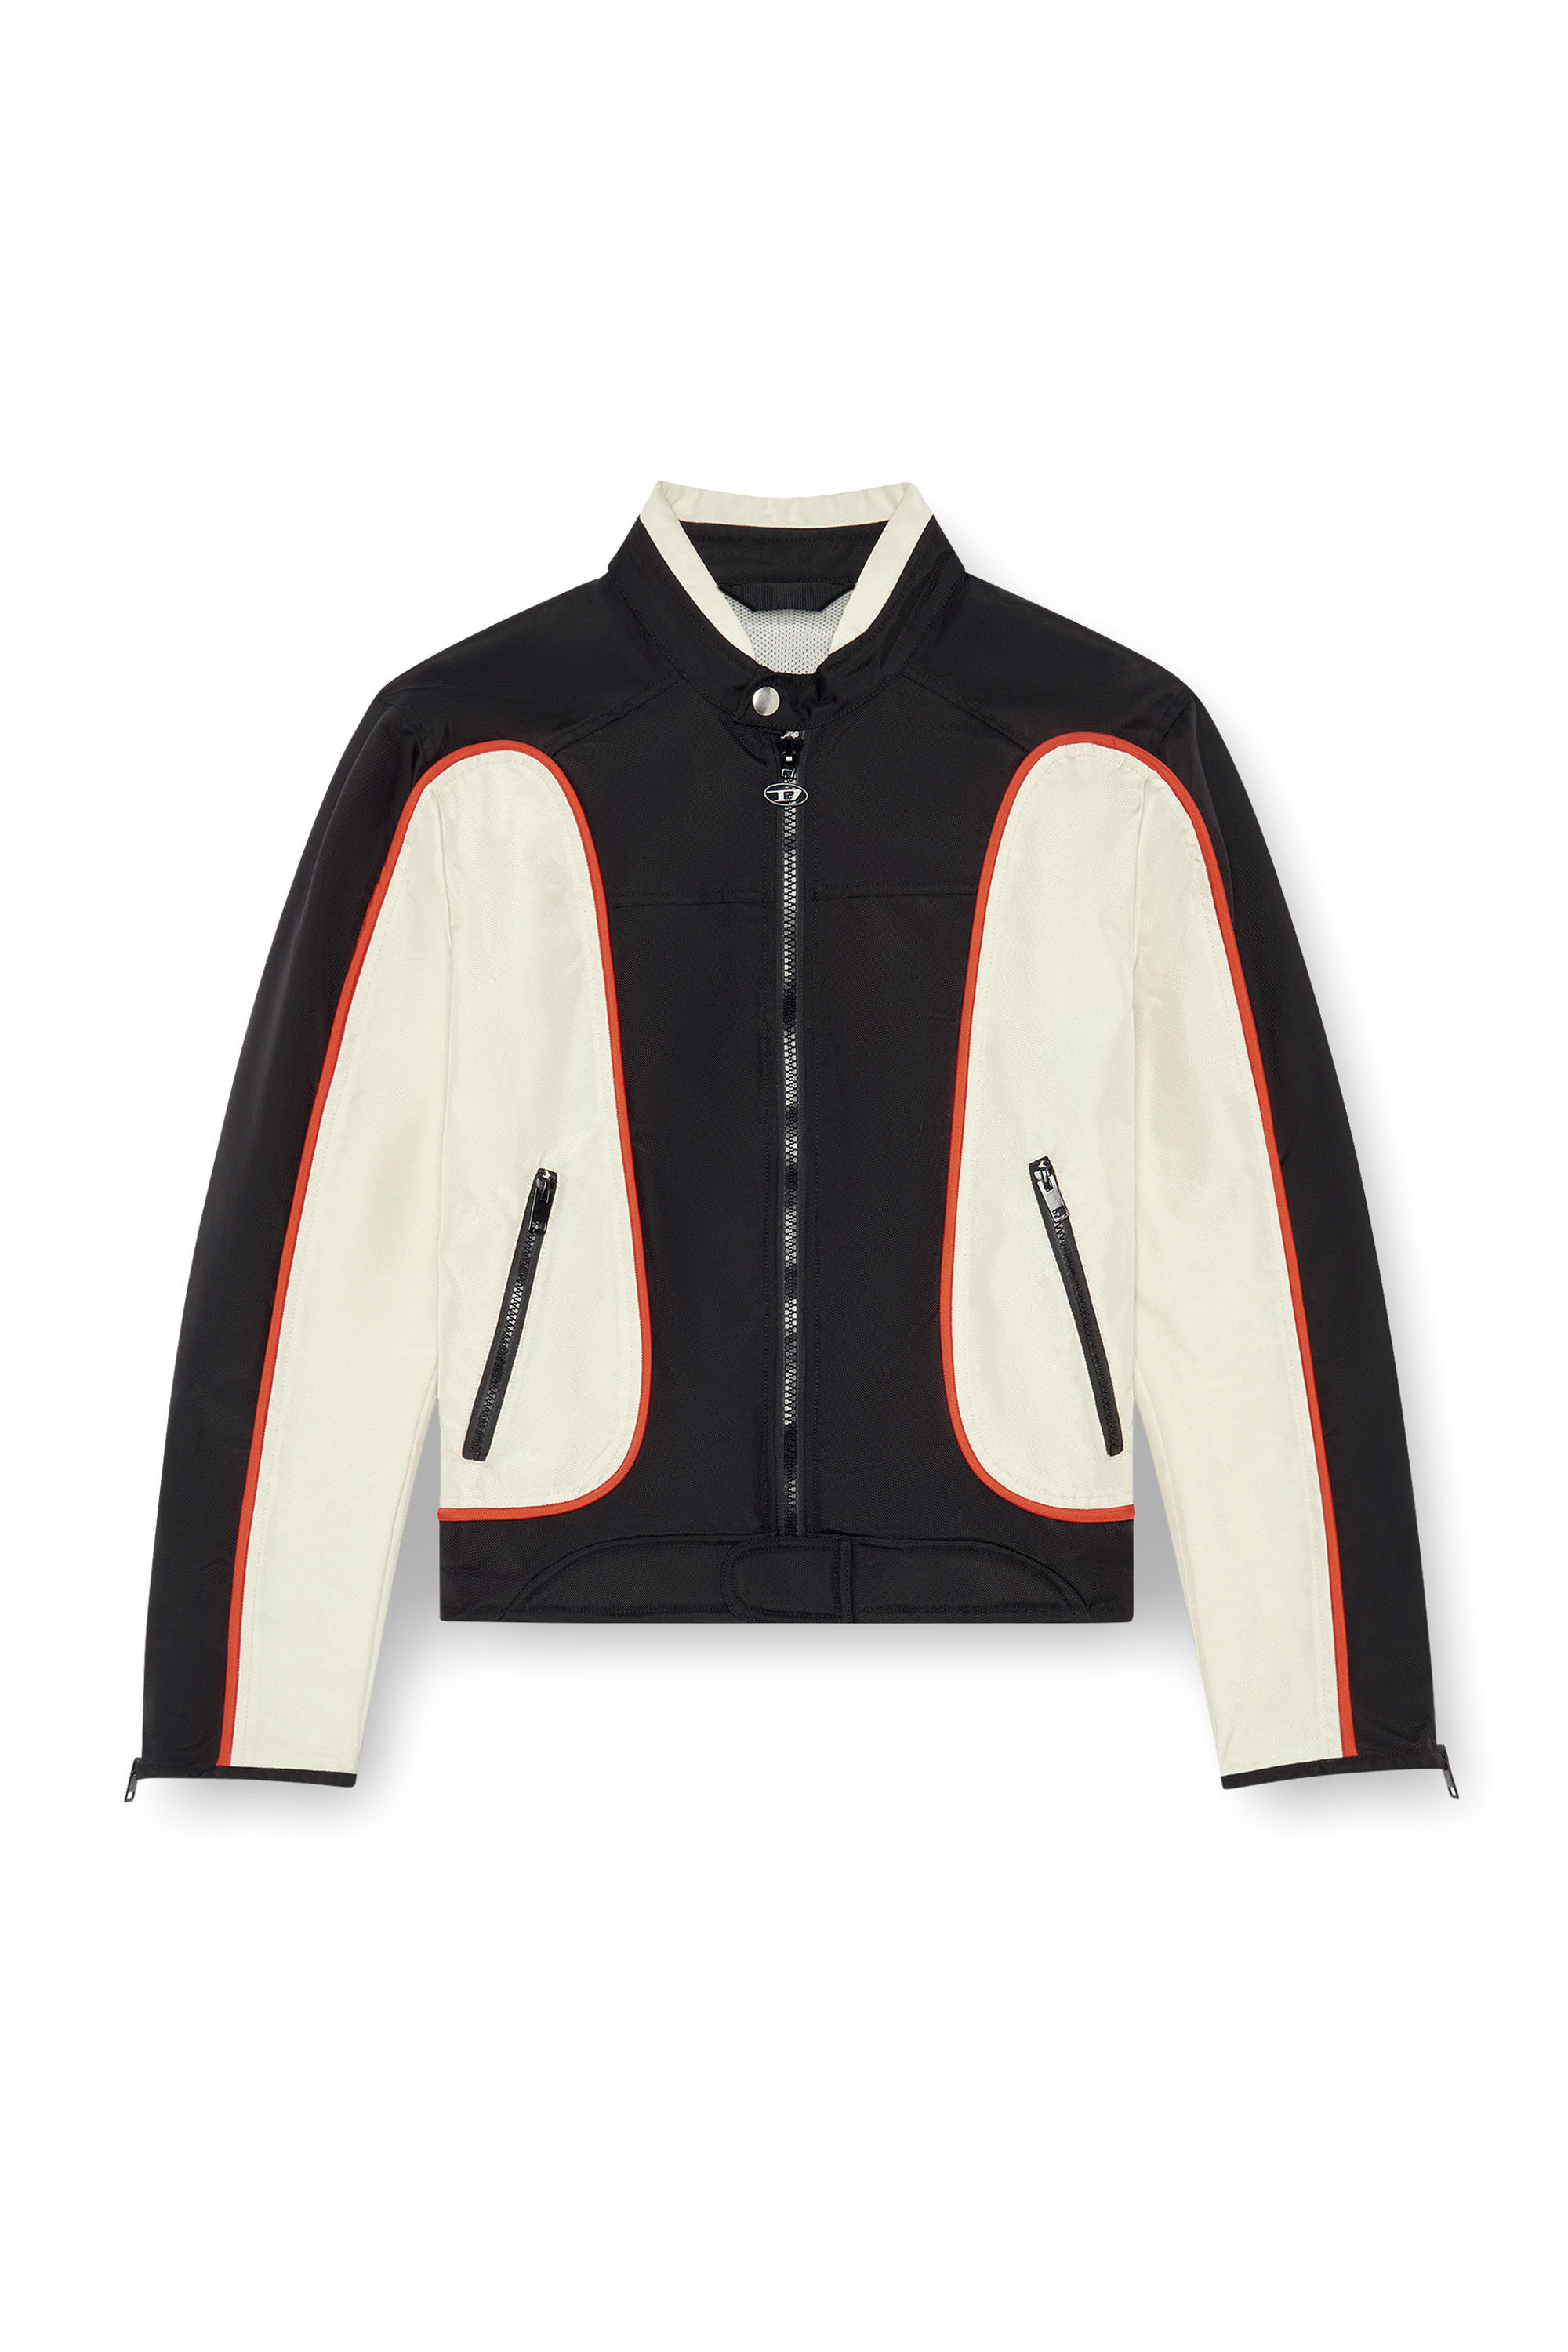 Diesel - J-BLINK, Male Biker jacket in colour-block nylon in Multicolor - Image 5